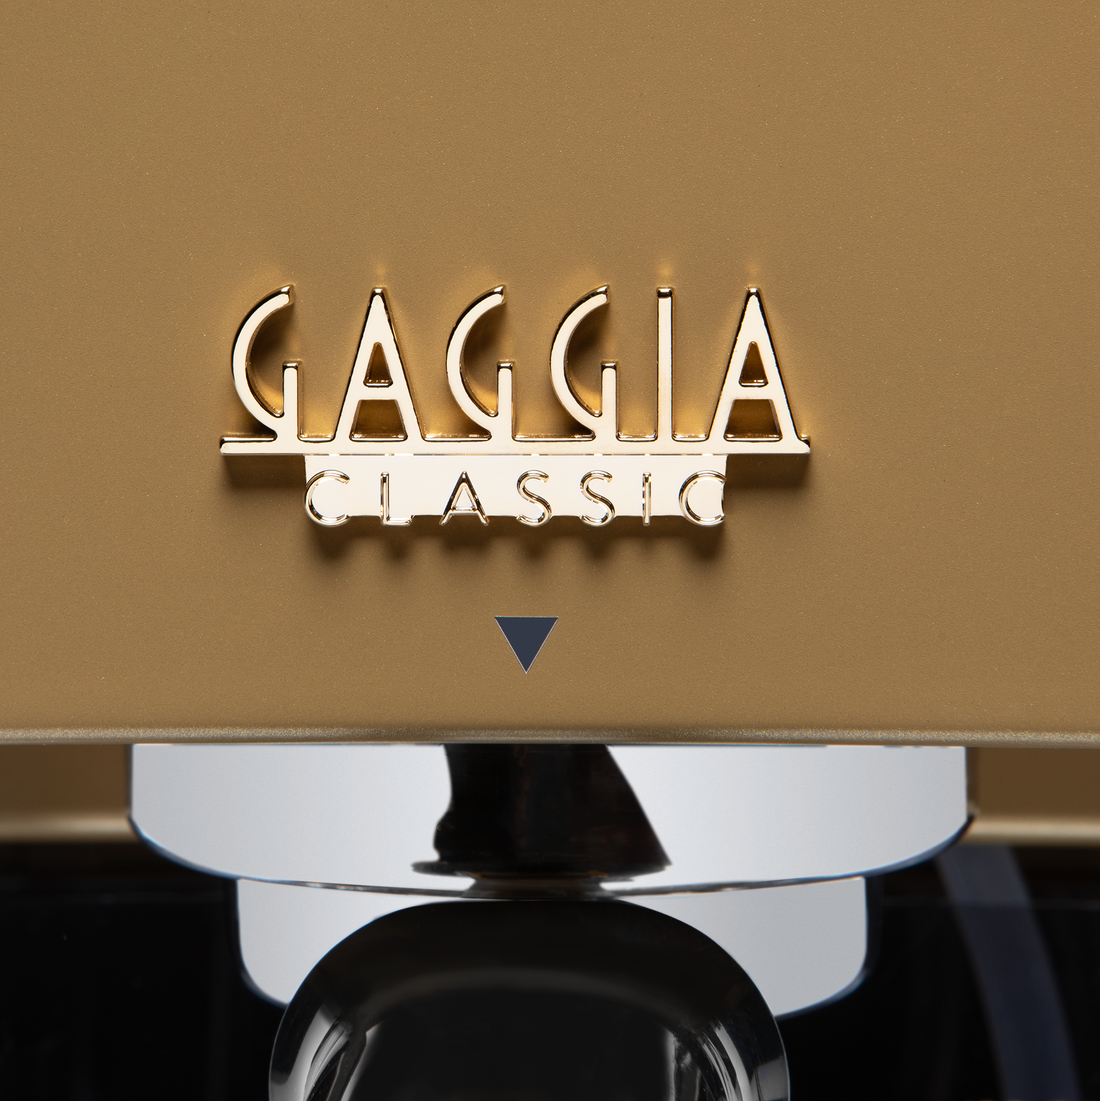 Gaggia Classic Evo Pro - 85th Anniversary Limited Edition with Tiger Maple